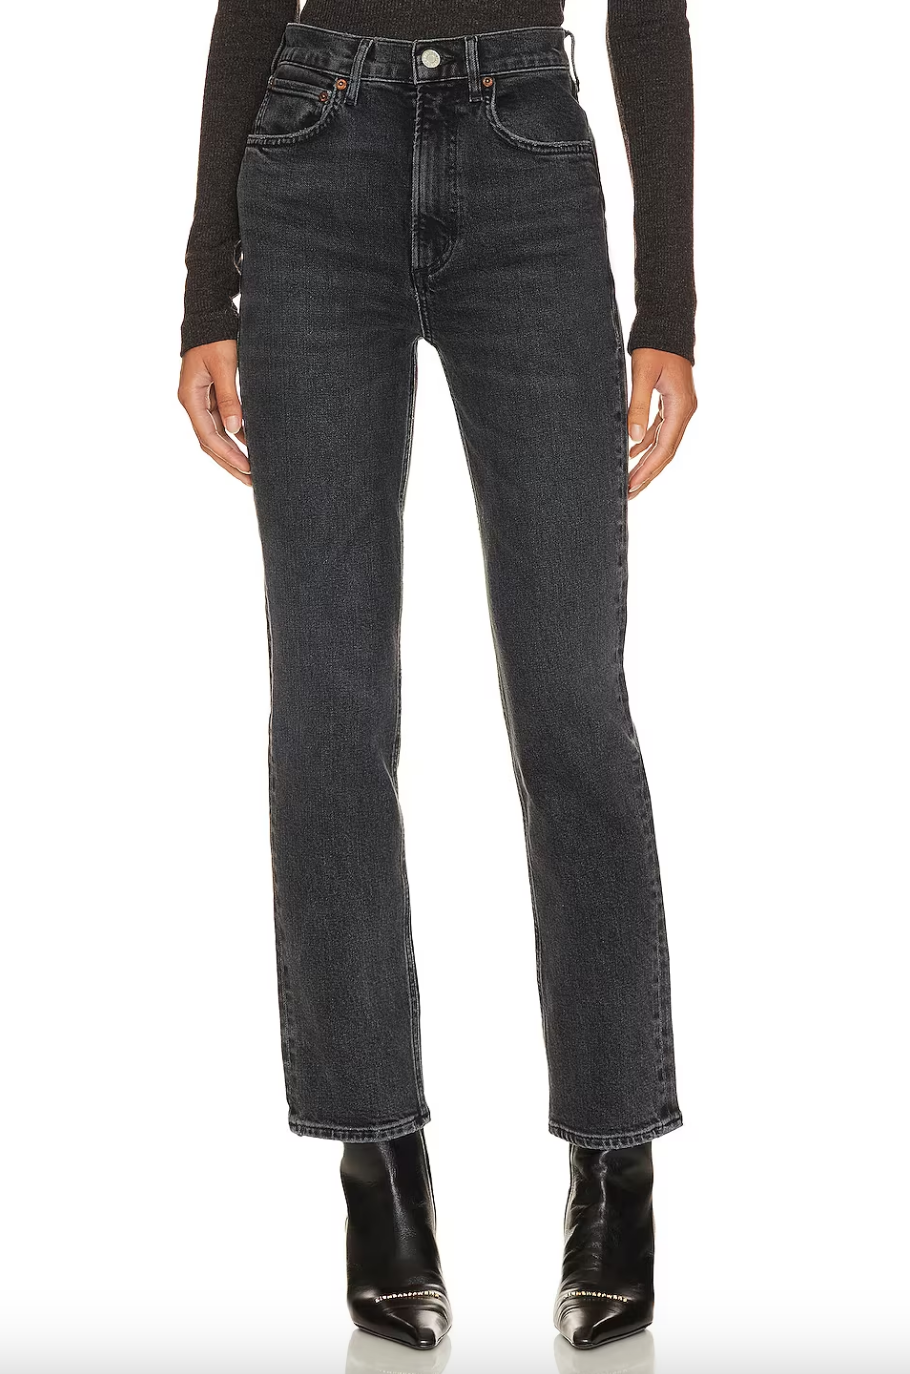 Kristin Cavallari's Grey Straight Leg Jeans